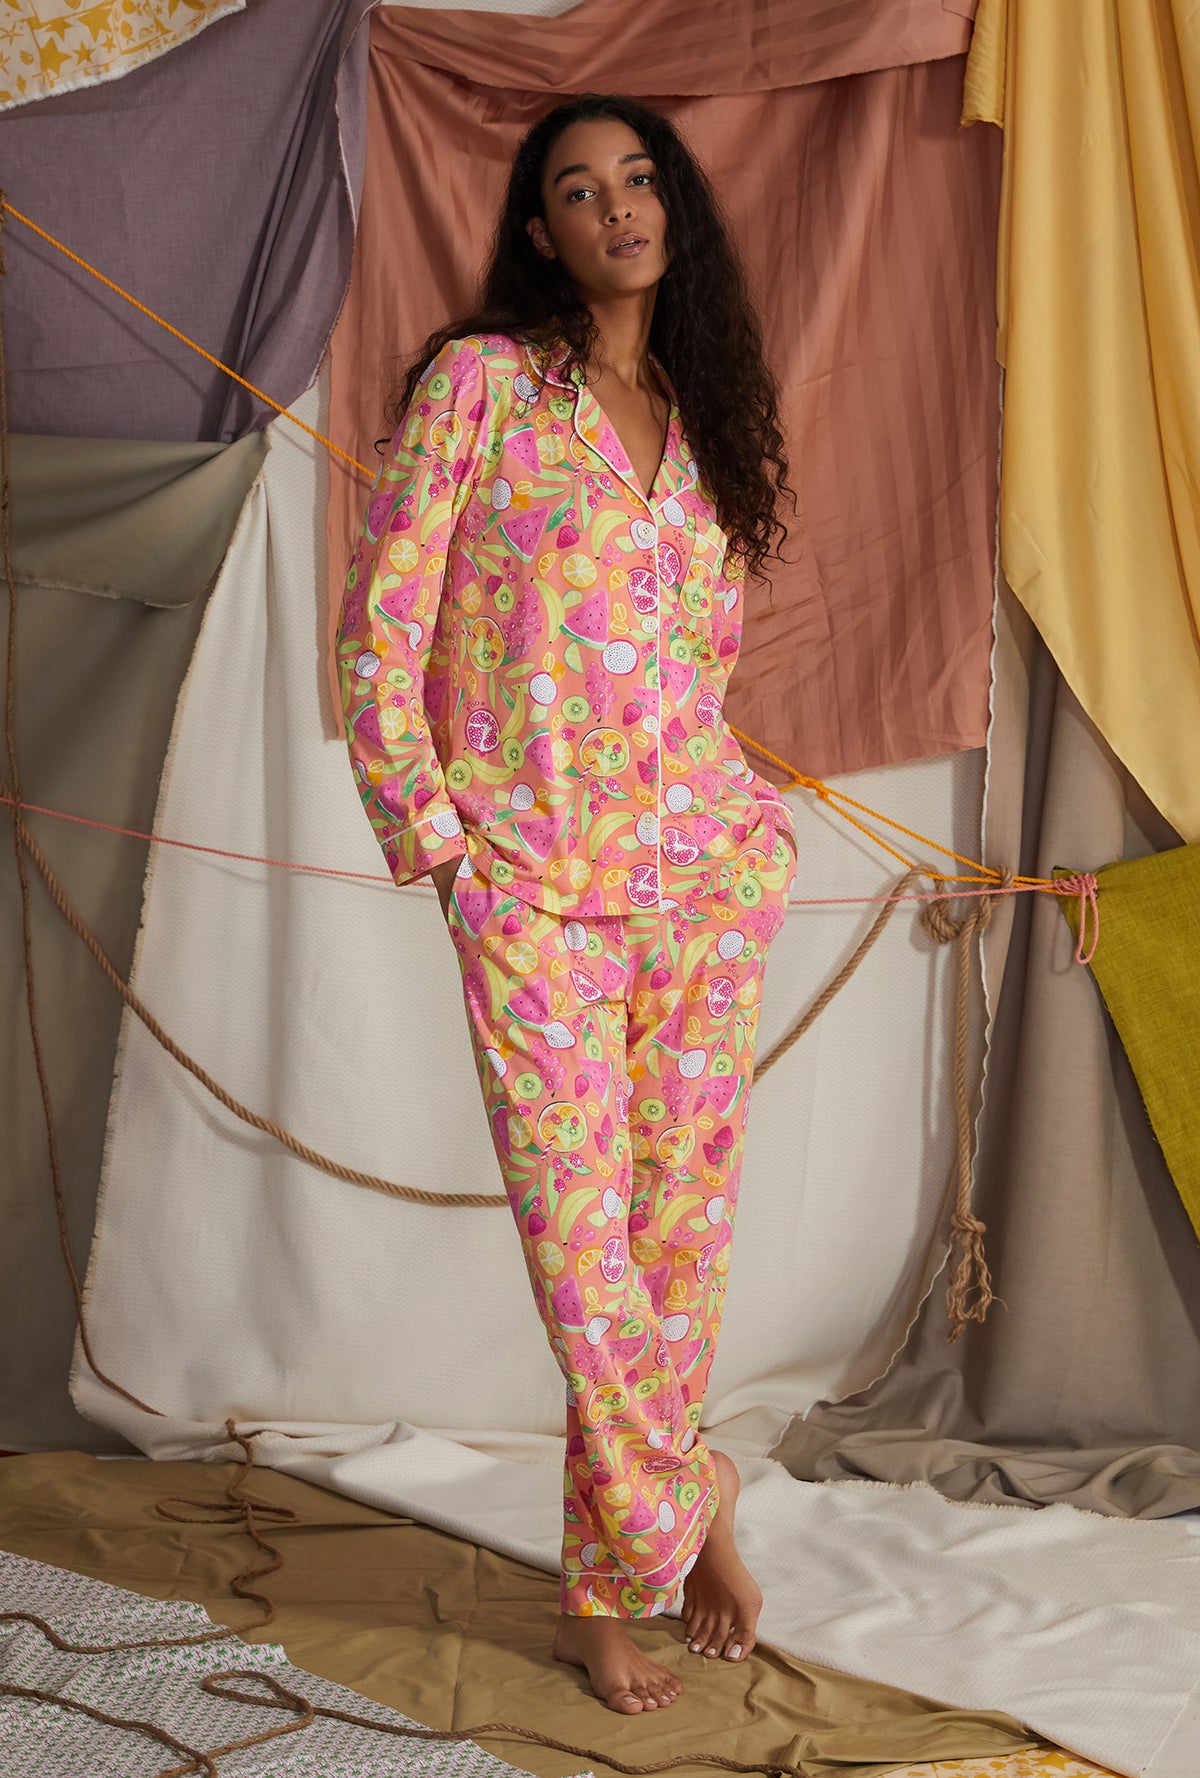 Wanderlust Long Sleeve Classic Stretch Jersey PJ Set - Bedhead Pajamas